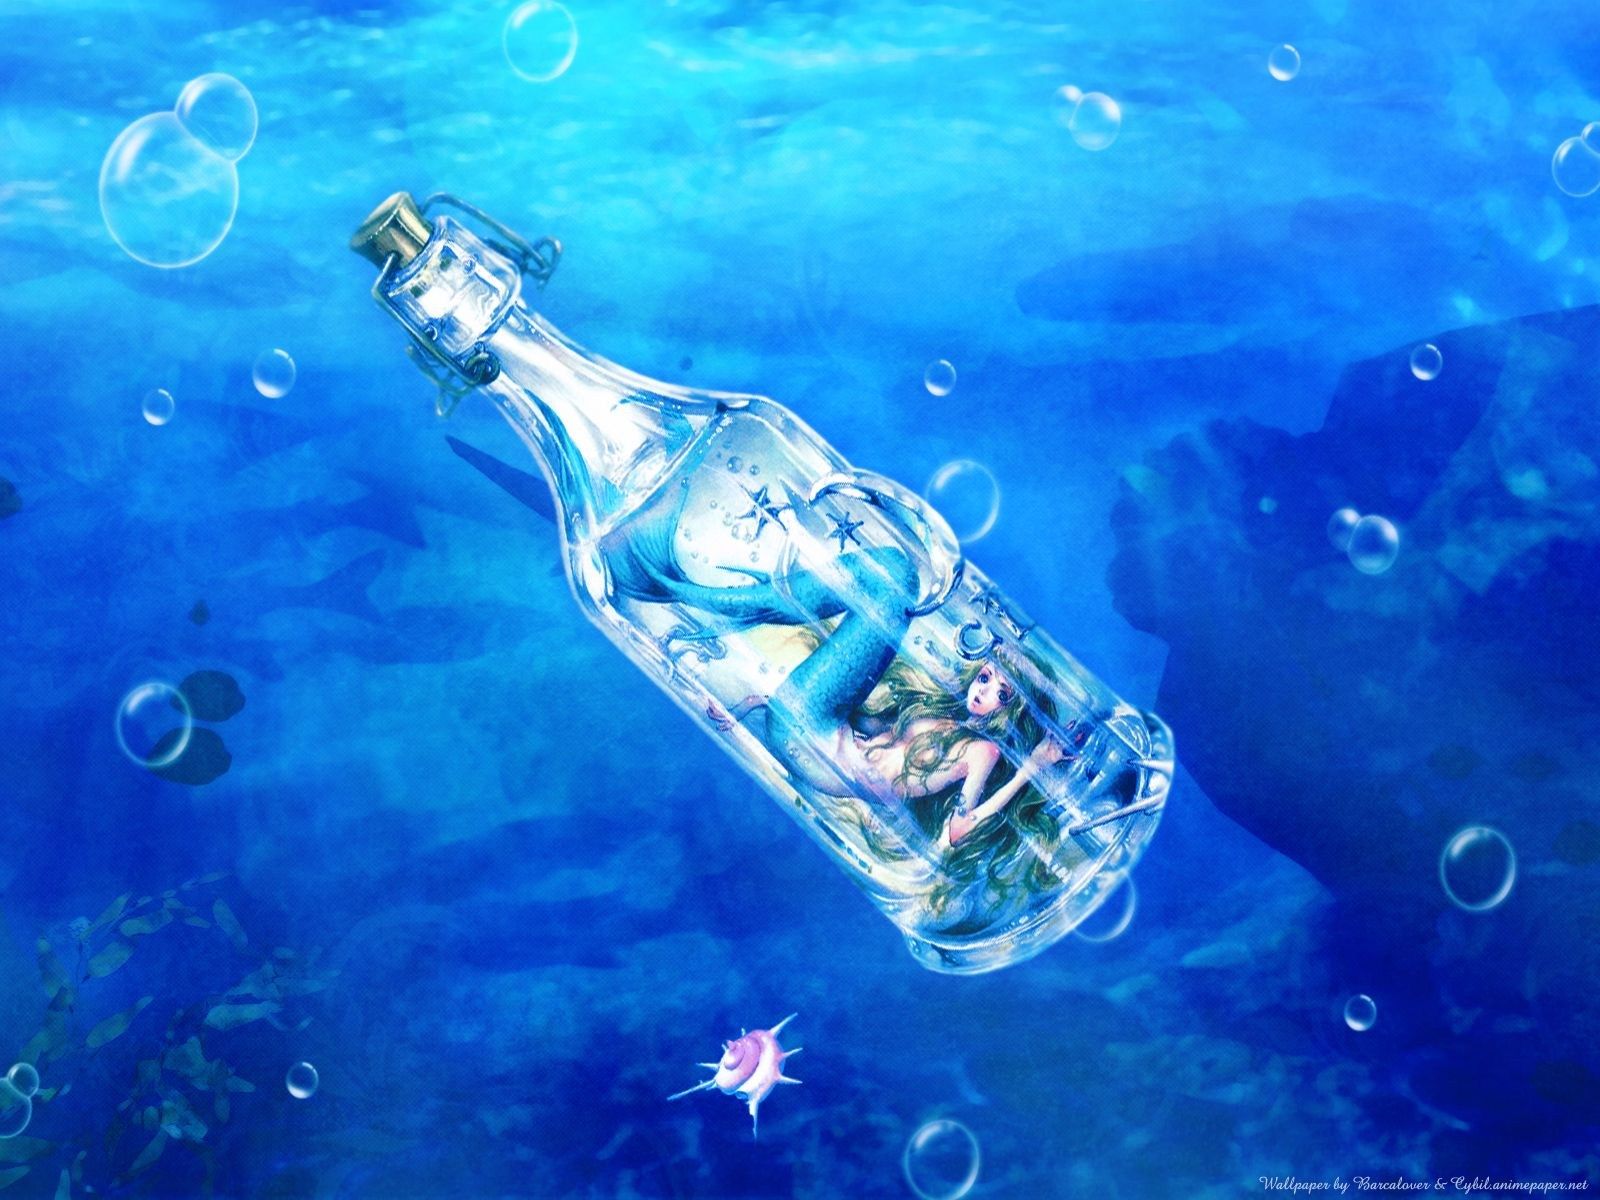 Anime Mermaid Wallpaper (31+), descarga 4K Wallpapers gratis